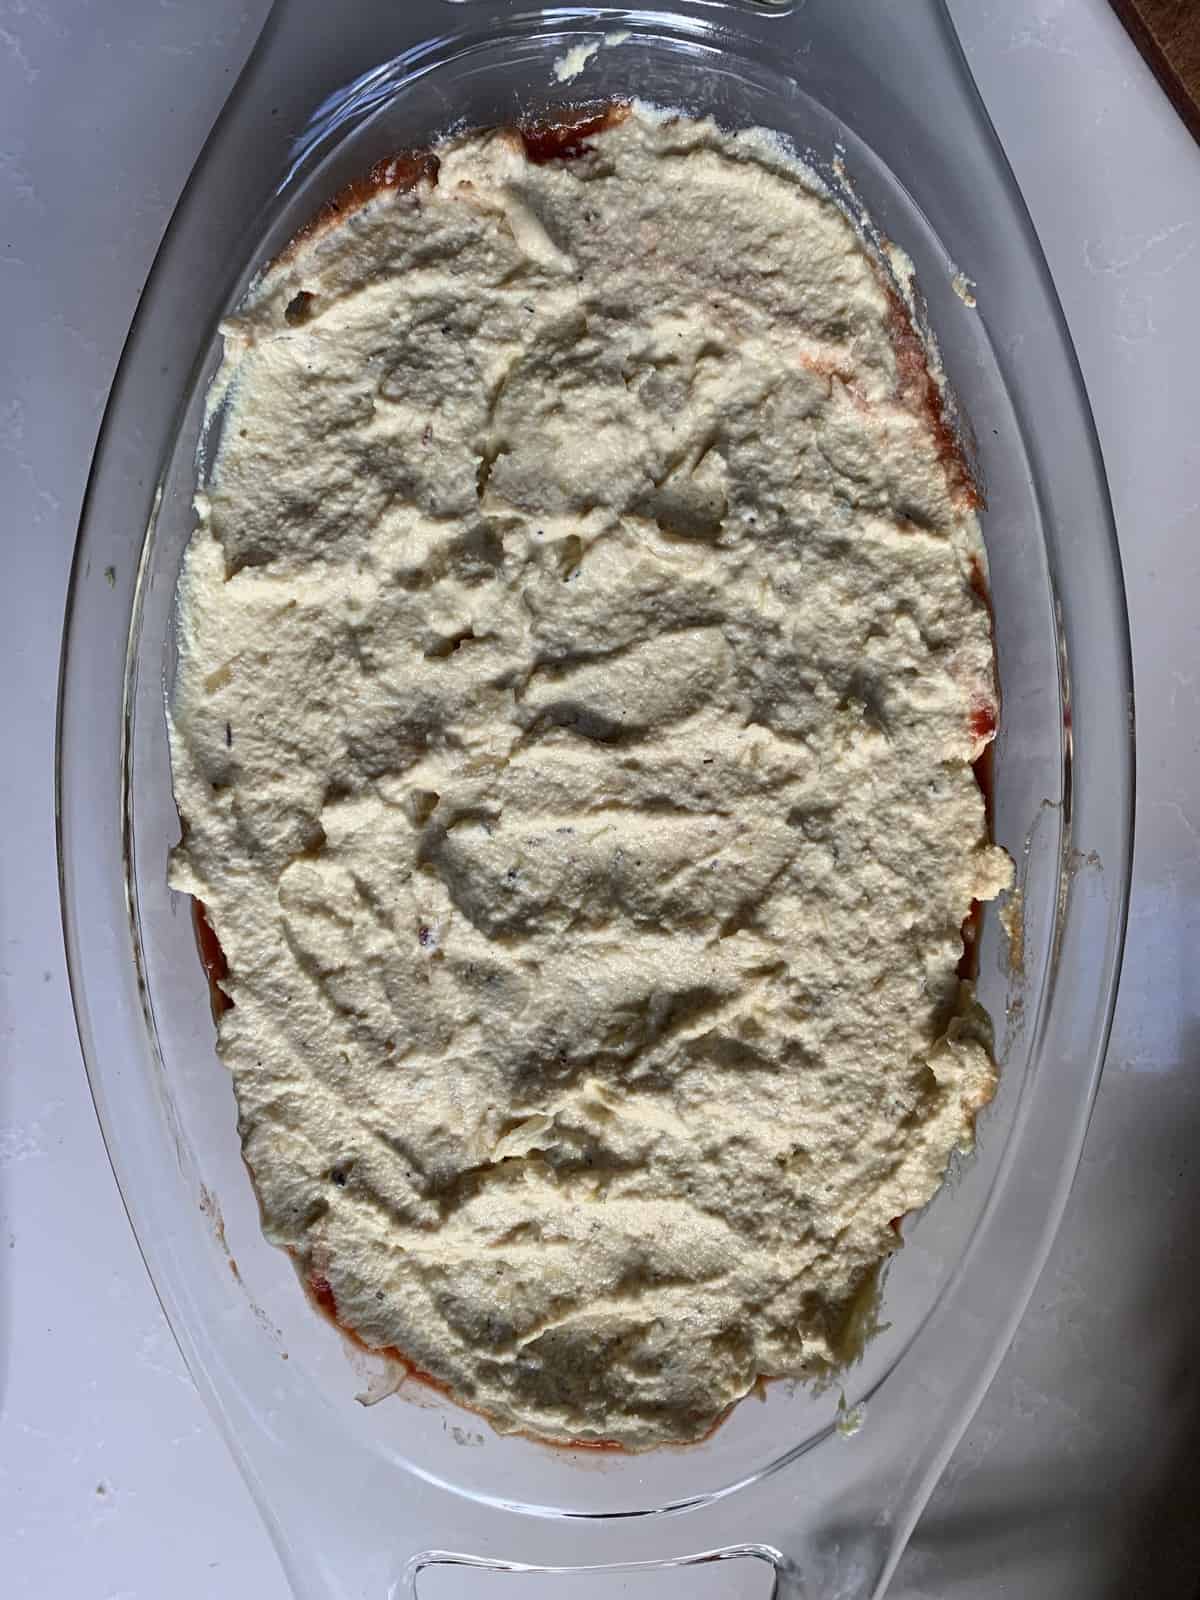 ricotta layer of lasagna dip